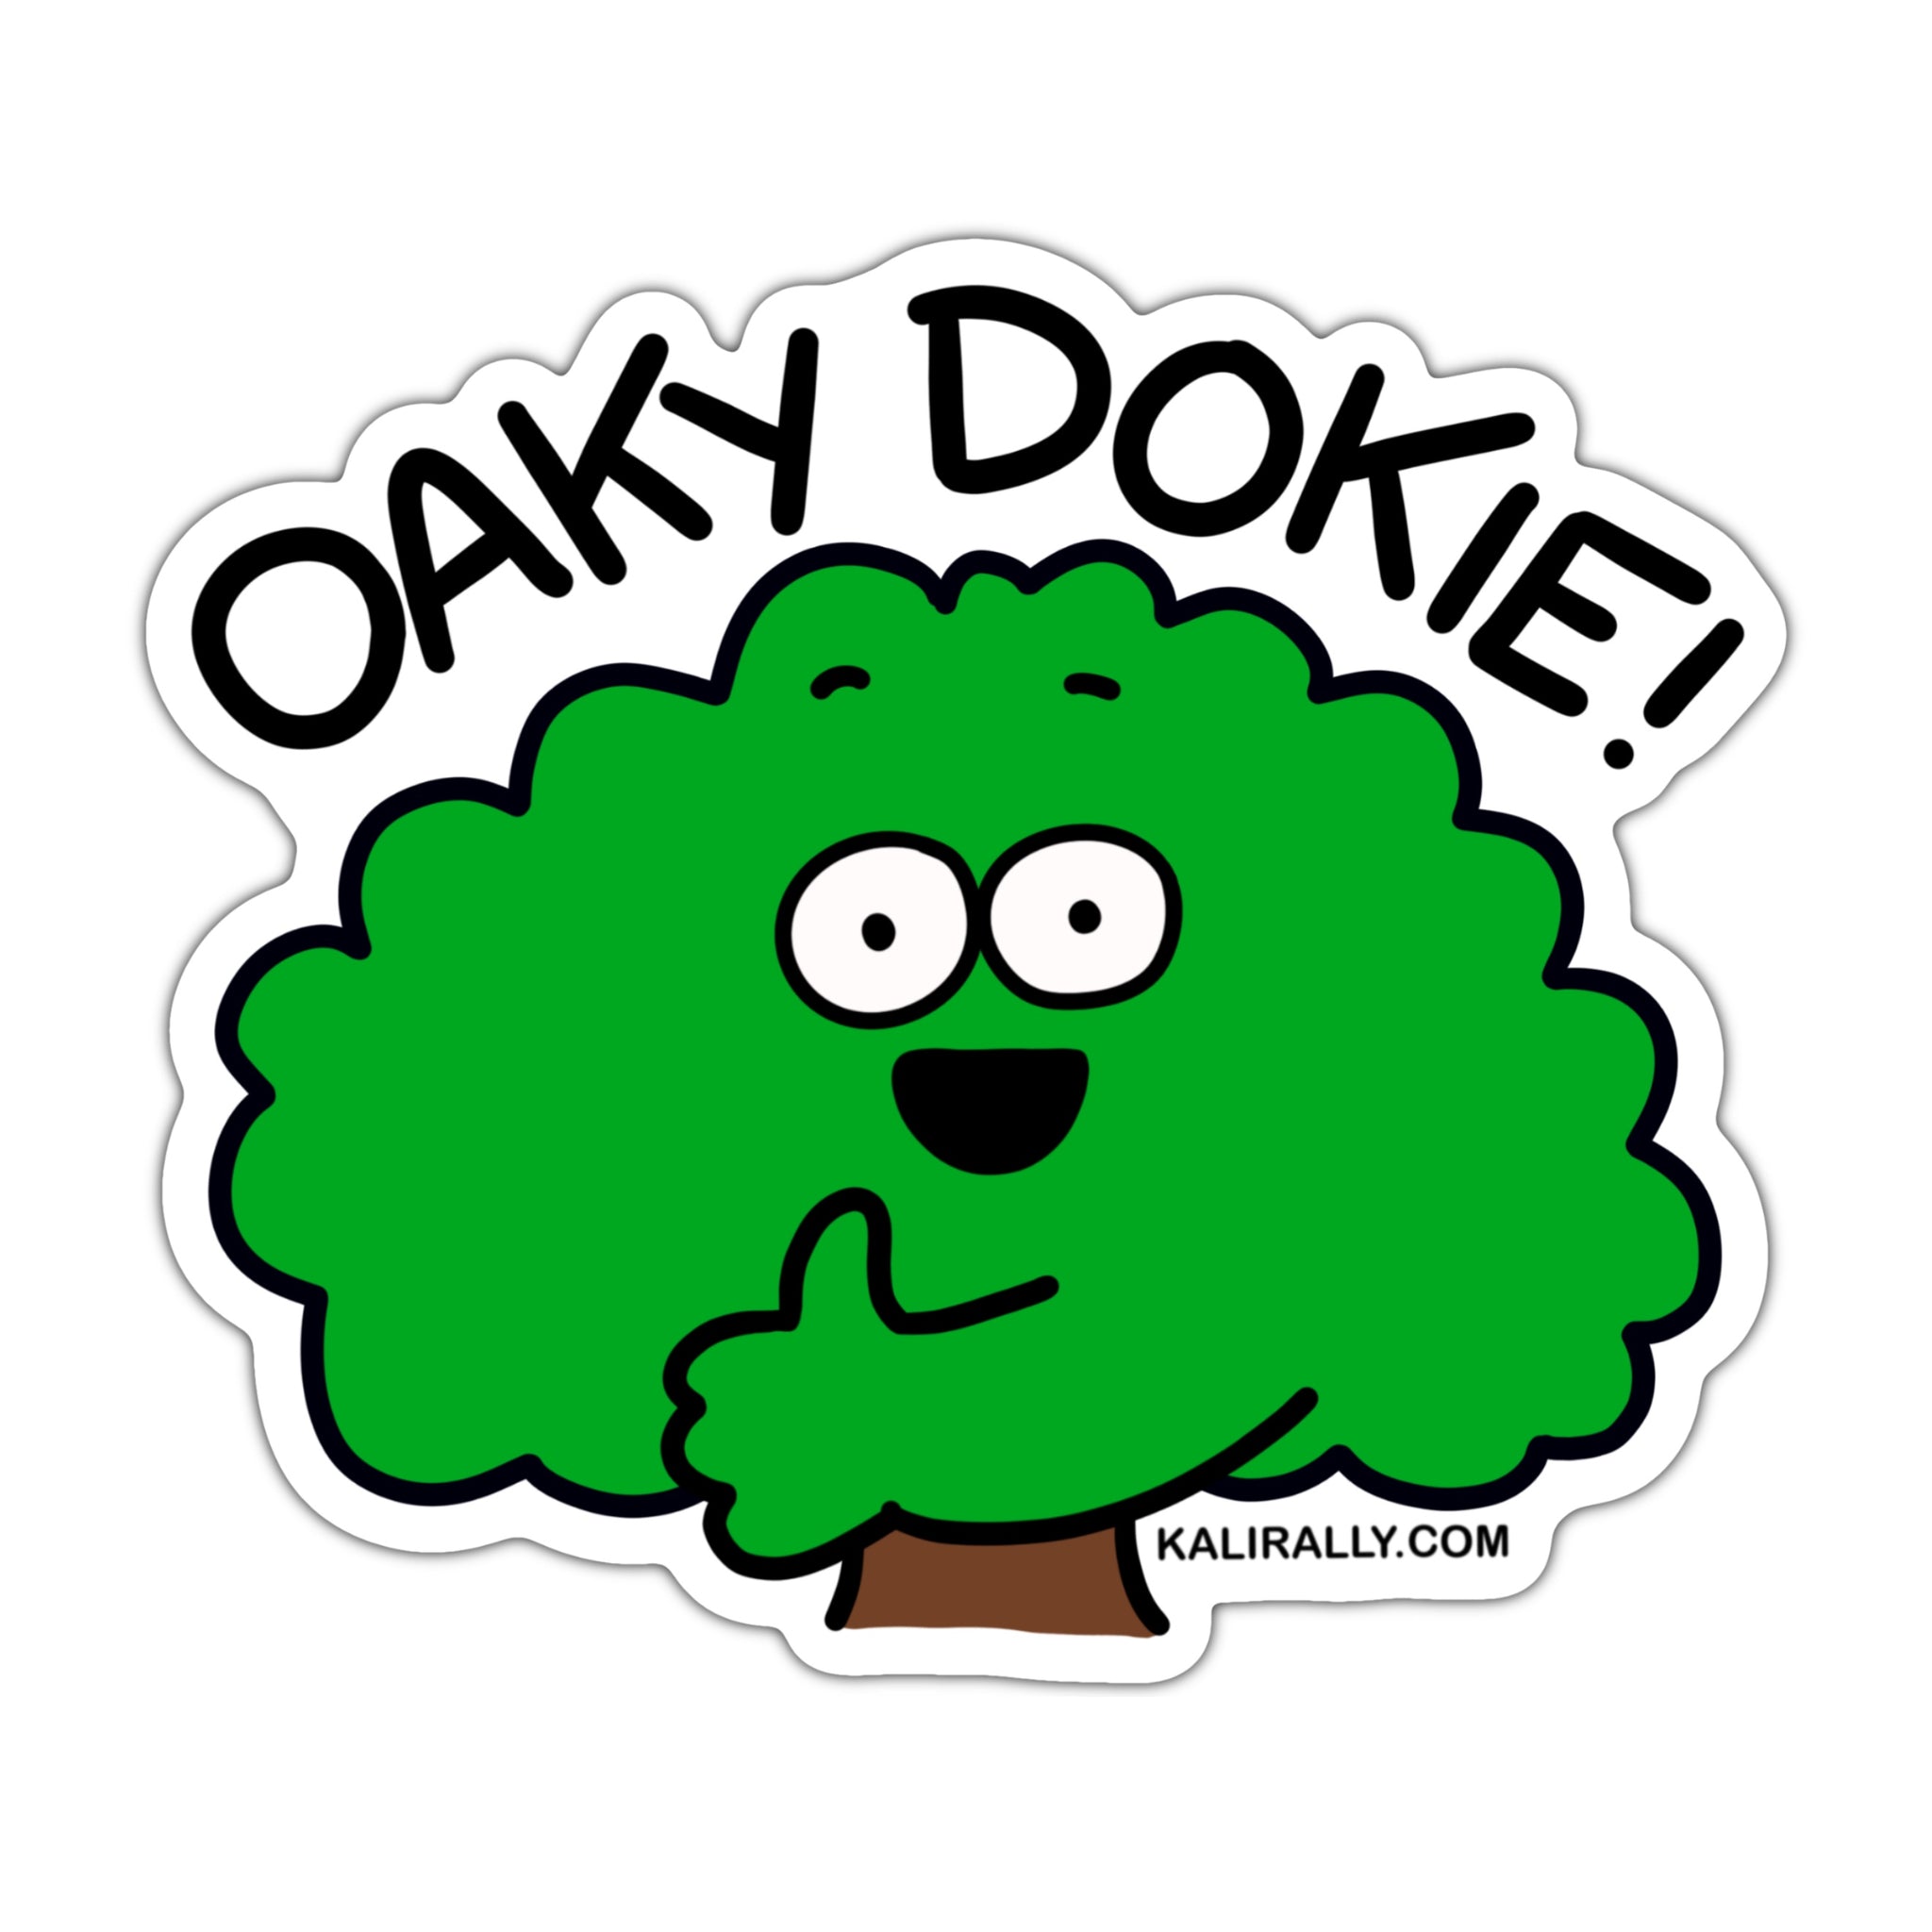 Funny okie dokie sticker, oak tree sticker, national parks sticker, hiking sticker, waterproof vinyl sticker